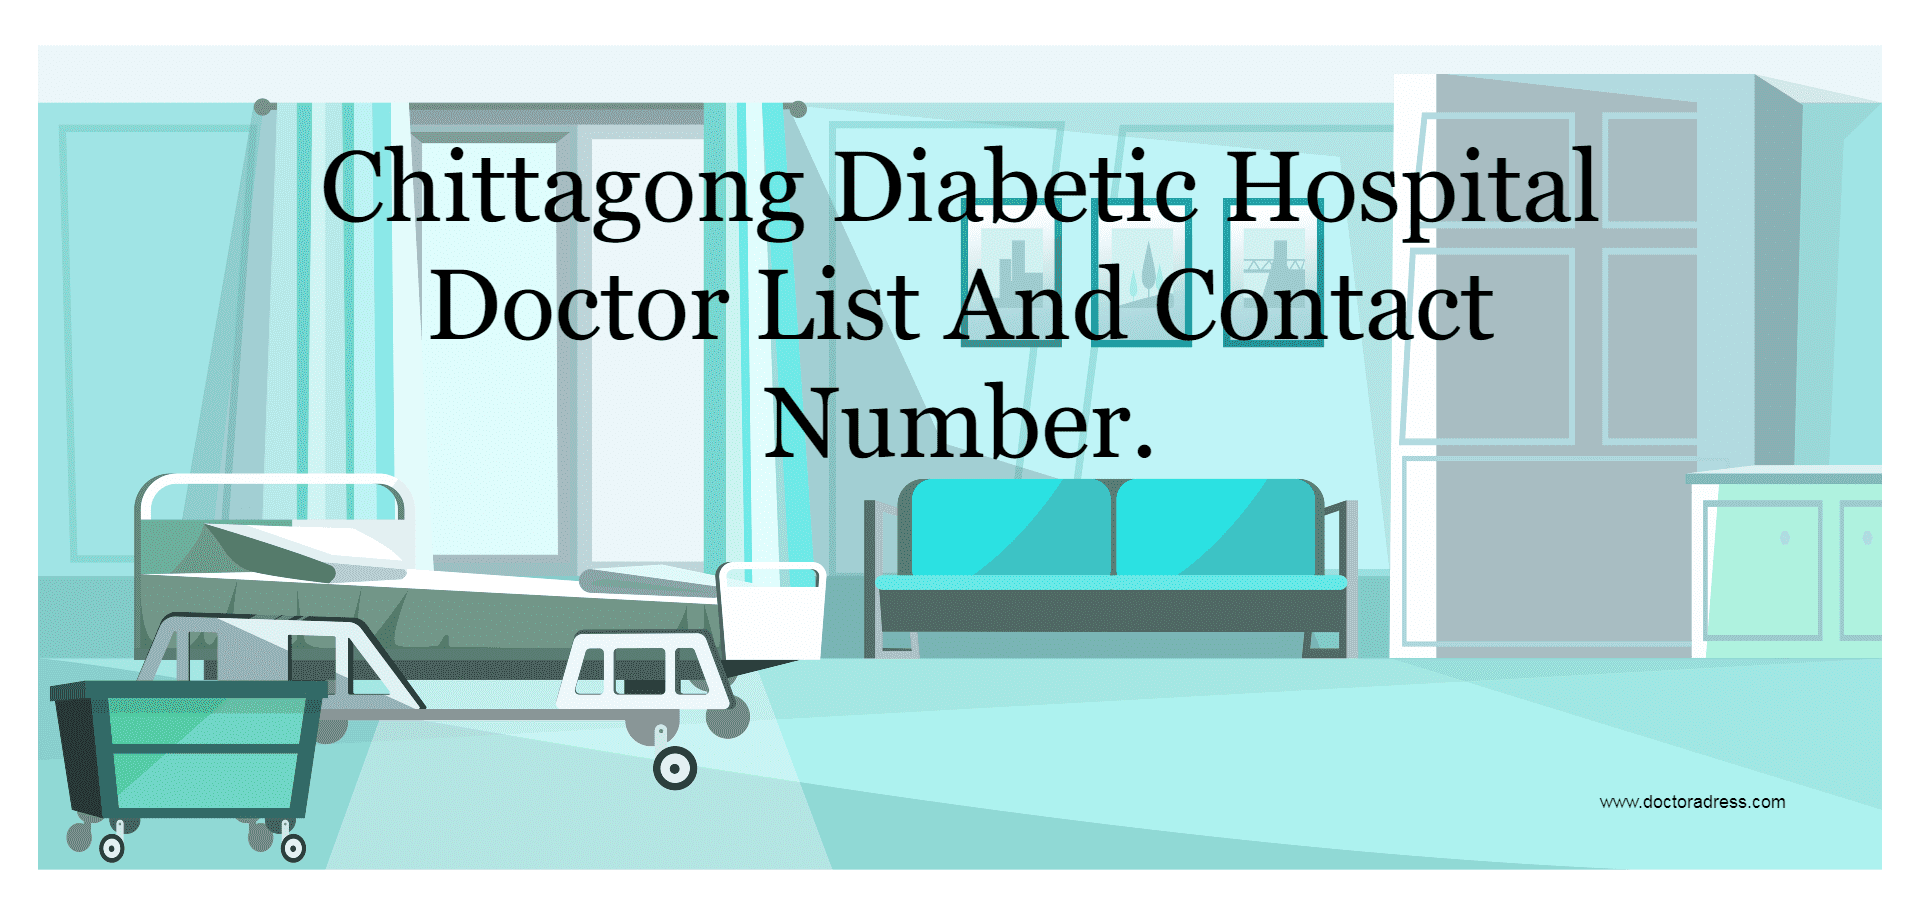 Chittagong Diabetic Hospital